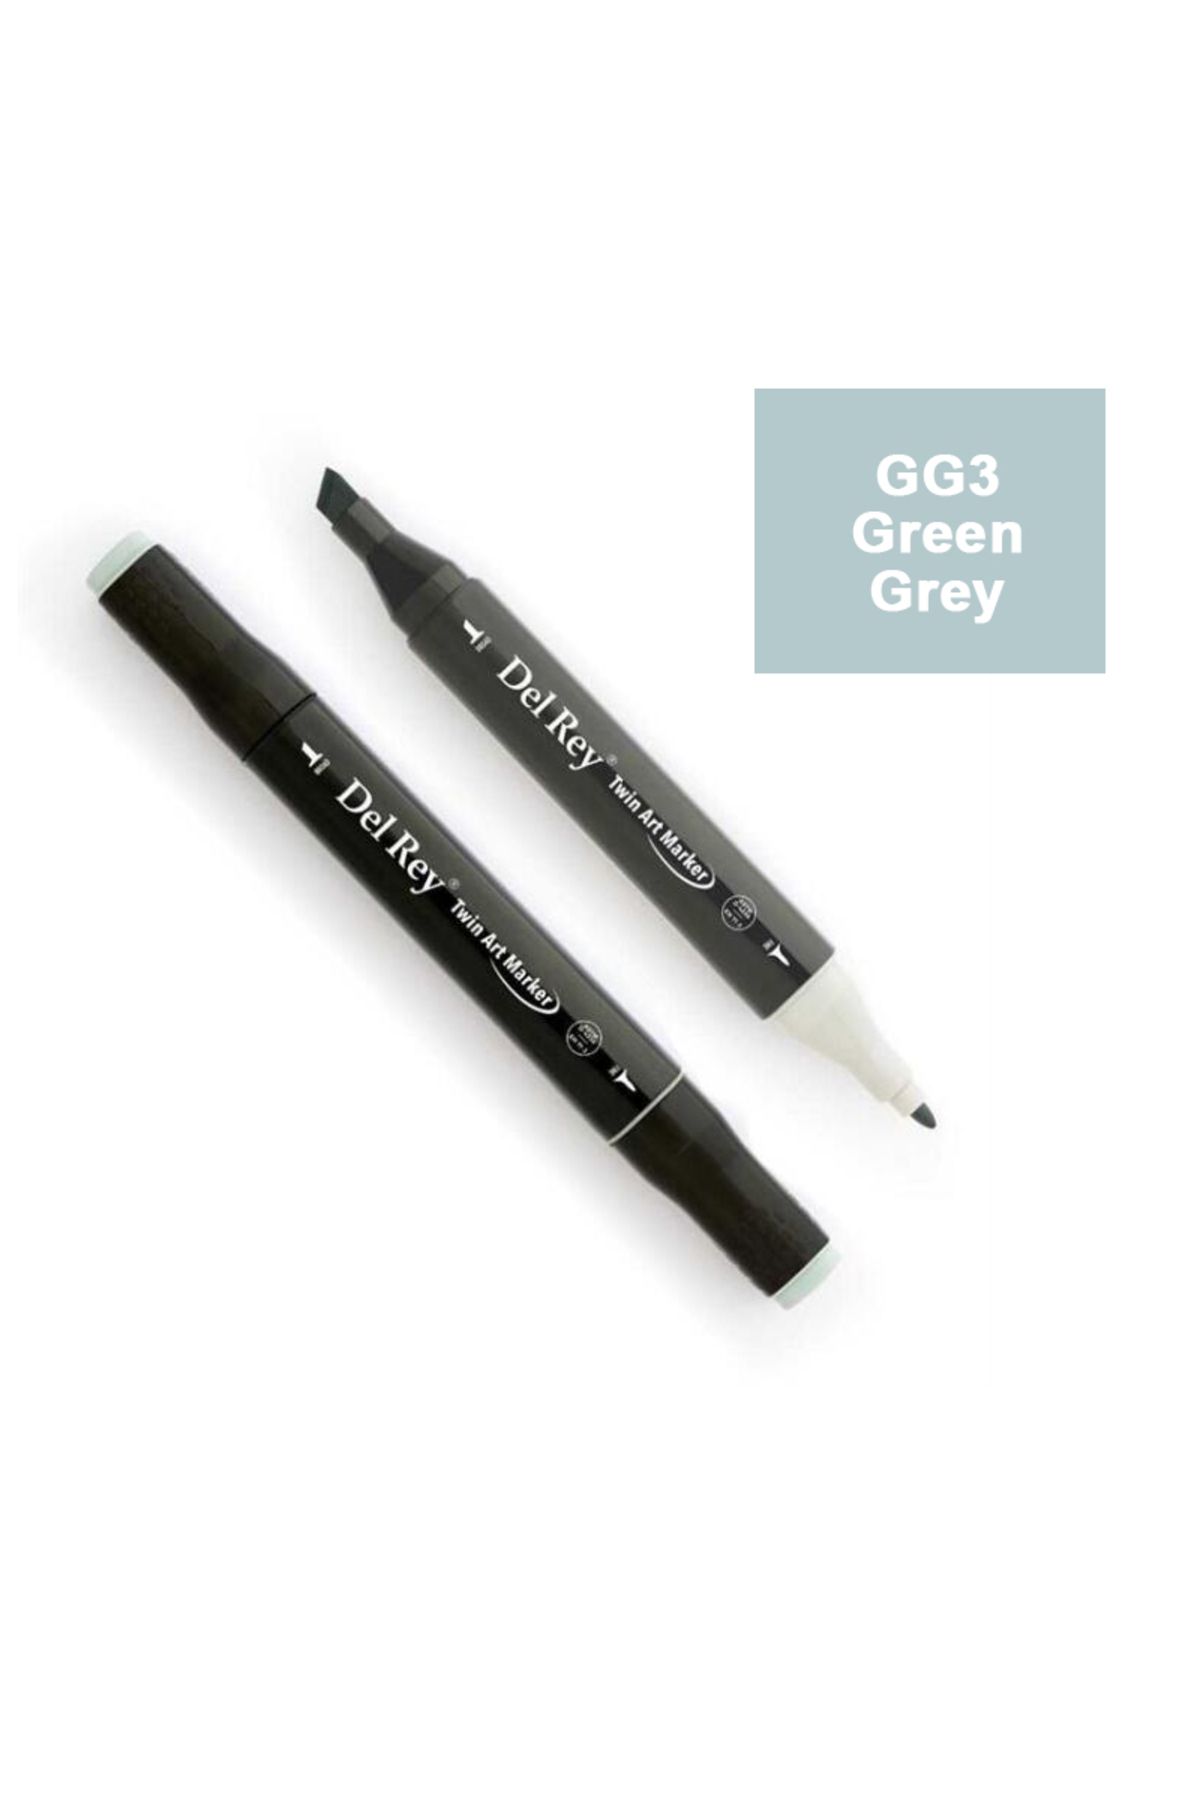 Pebeo Del Rey Twın Marker Gg3 Green Grey Çift Uçlu Grafik Kalemi Mn-Drgg3